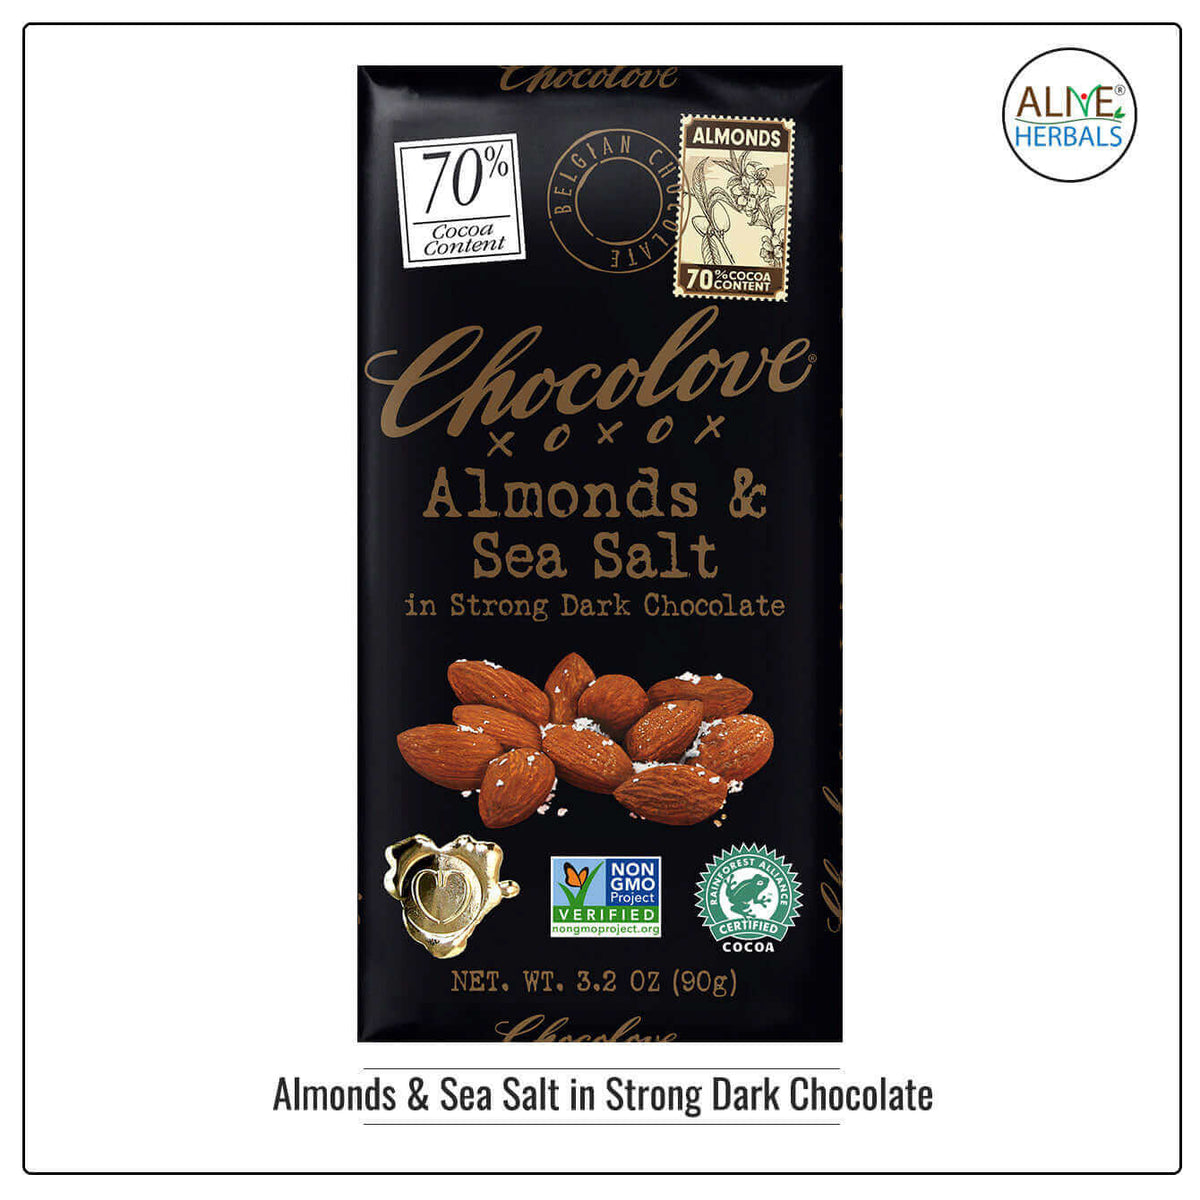 Almonds &amp; Sea Salt in Strong Dark Chocolate - Buy at Natural Food Store | Alive Herbals.